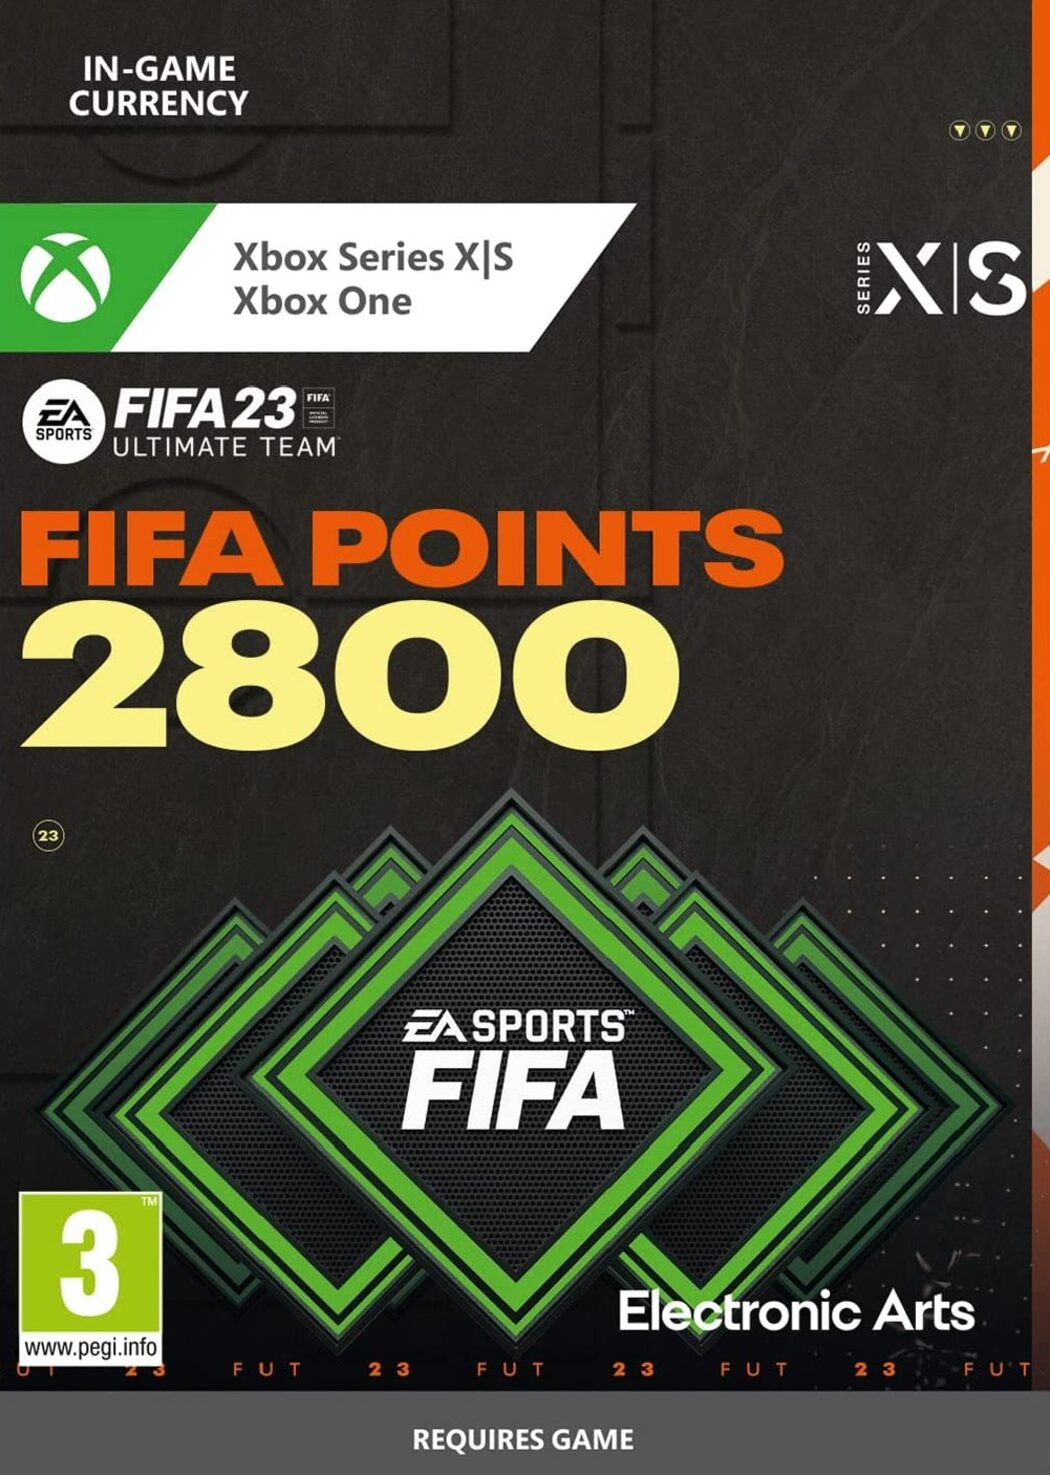 FIFA 22 FUT Points PC - Yolo Gaming.key